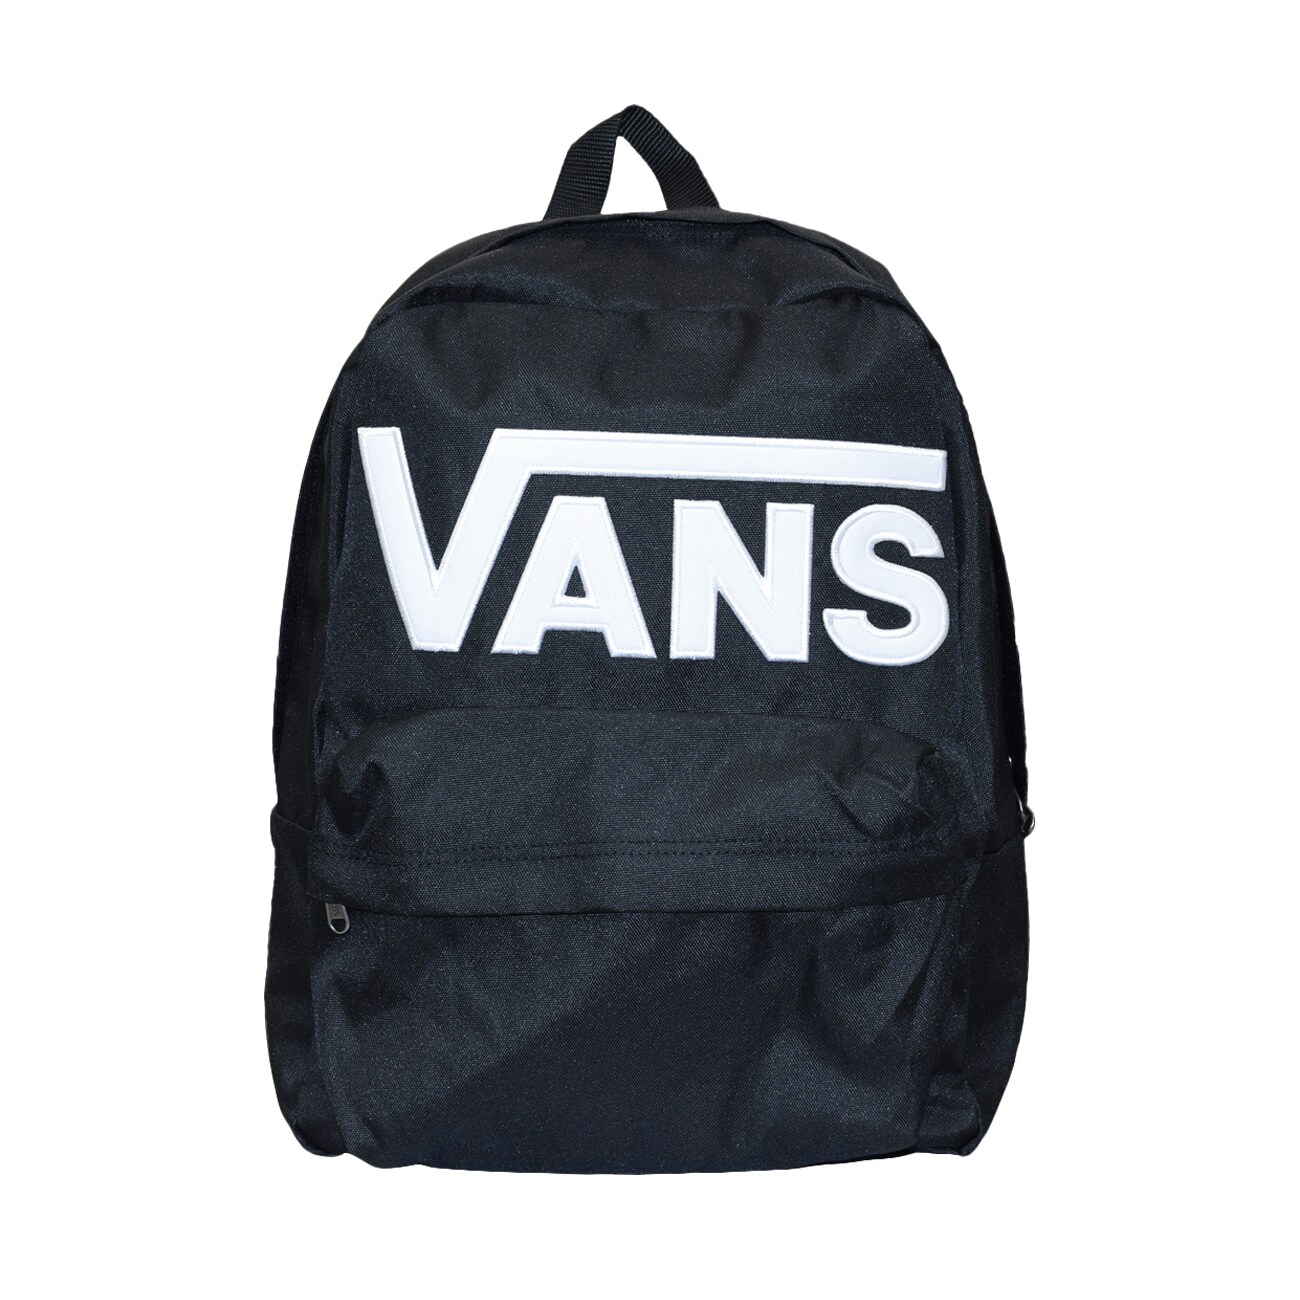 the vans backpack